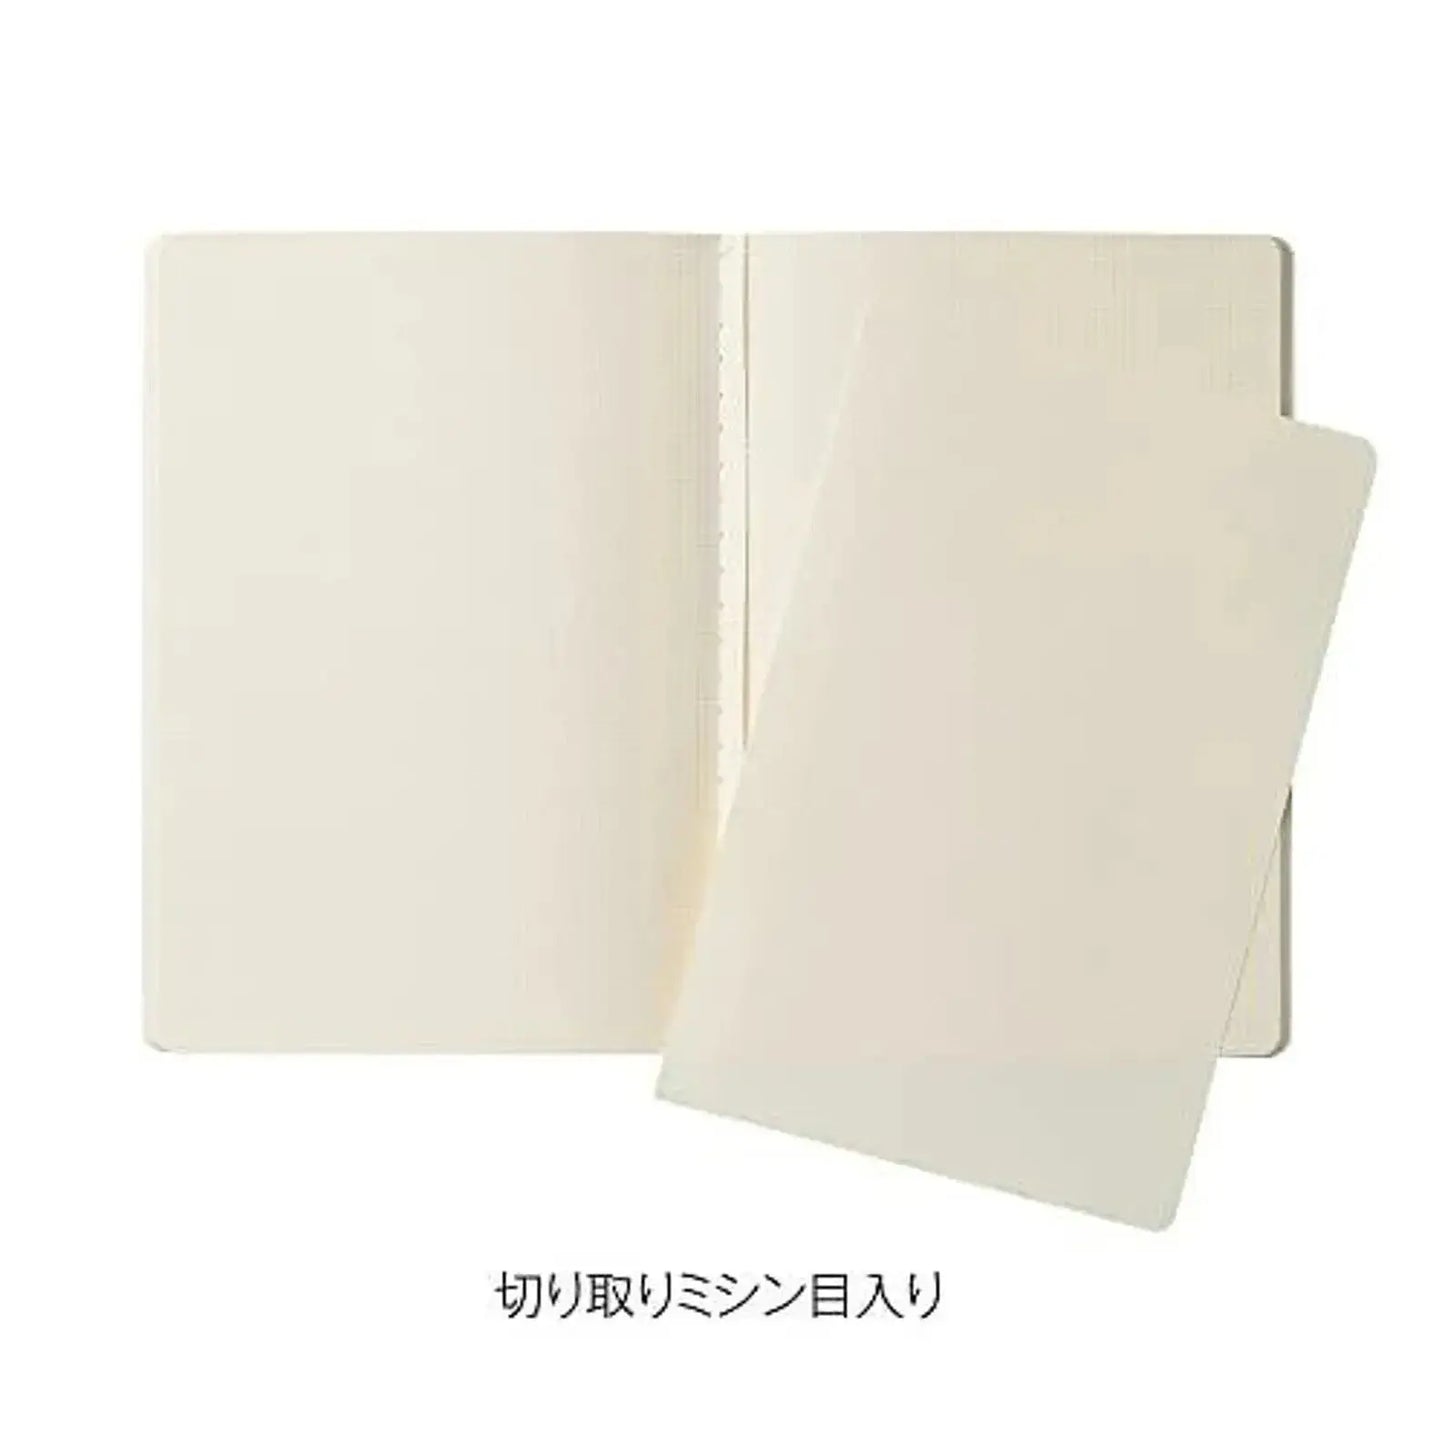 Kleid B6 TINY GRID Notes OK Fools Paper Notebook (Cream)